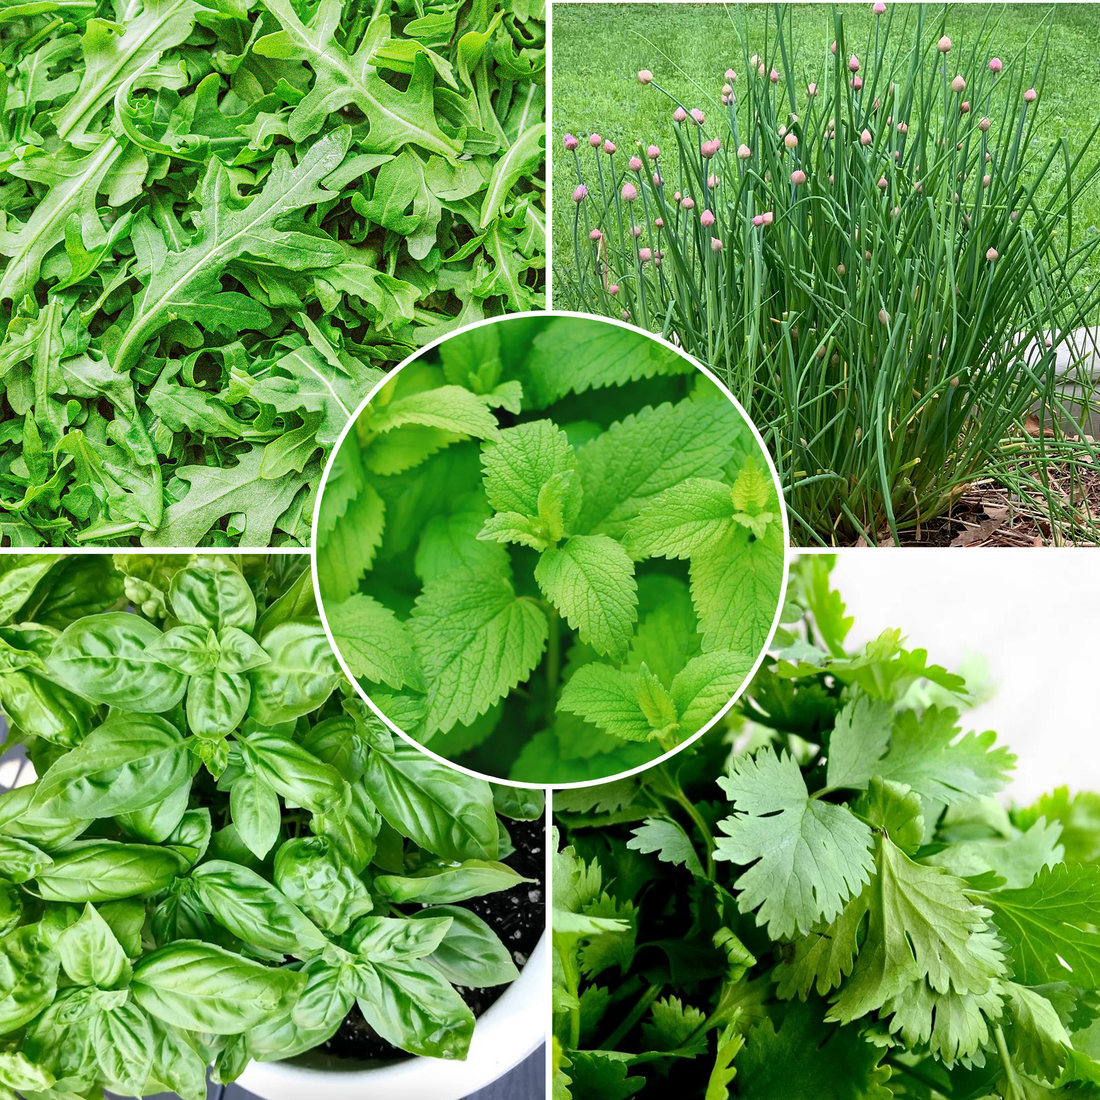 OrganicIndiaSeeds Culinary Herb seed Kit